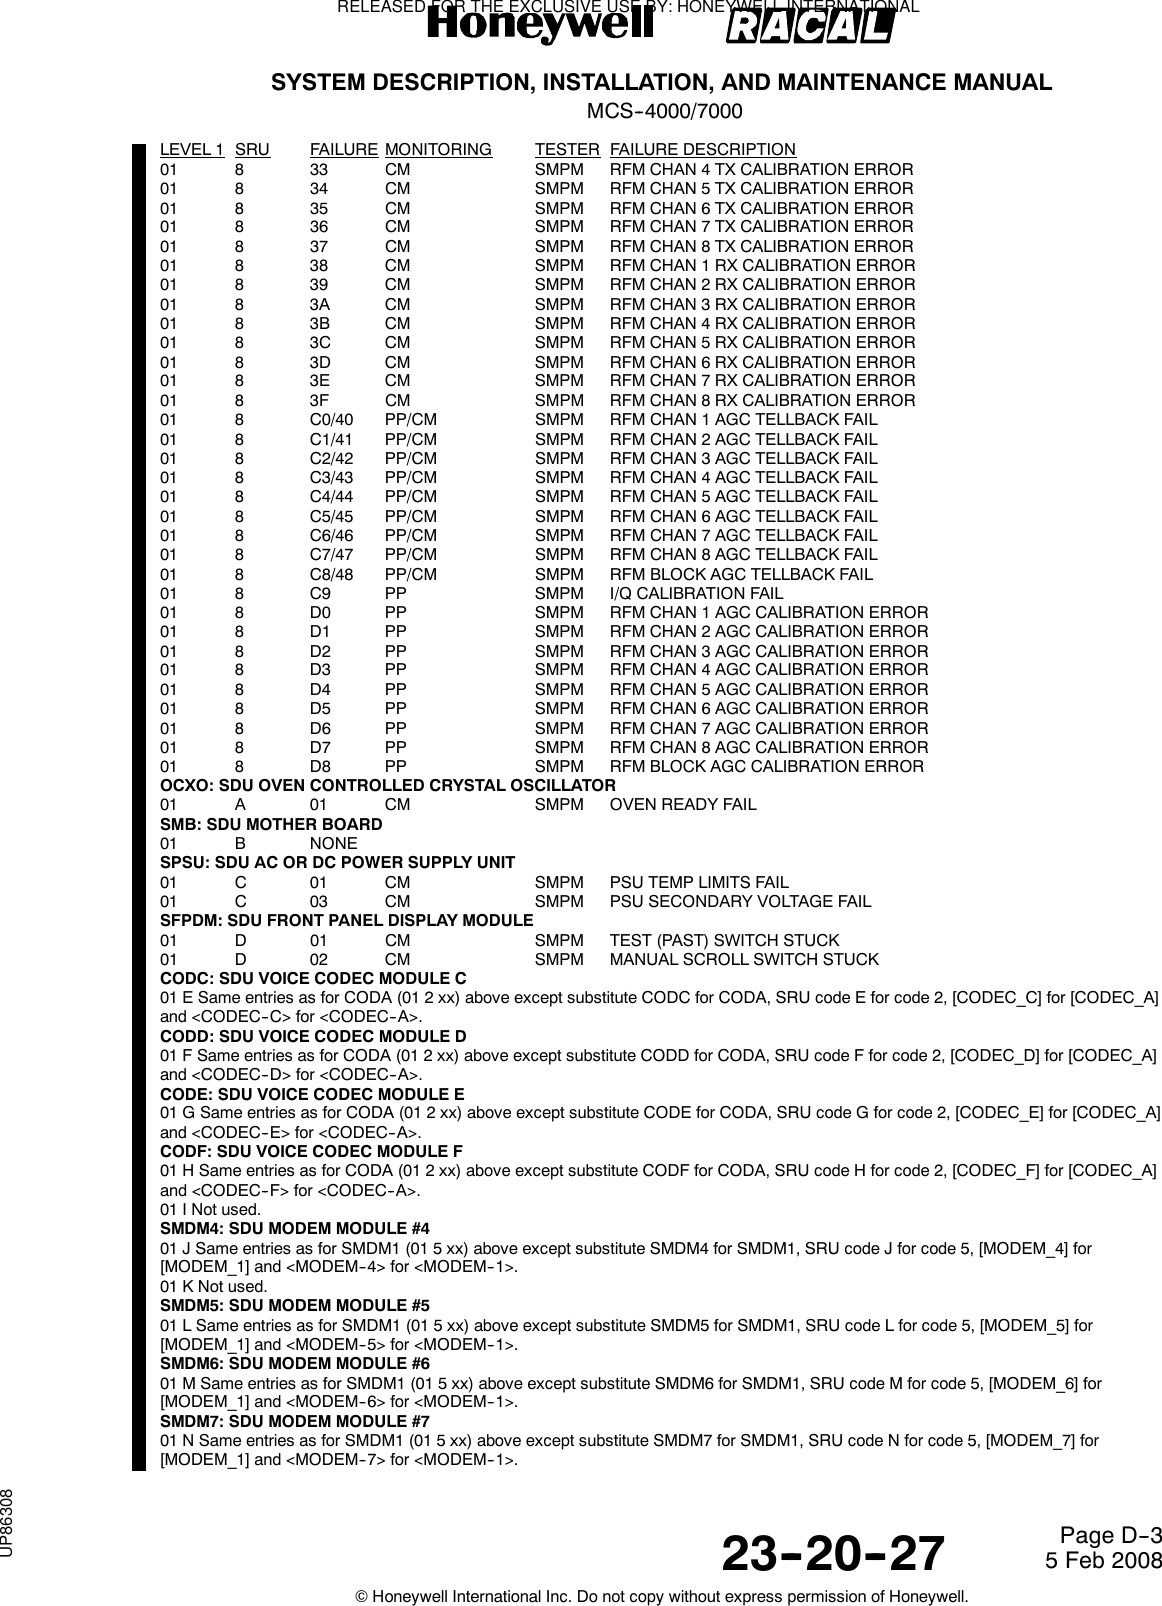 SYSTEM DESCRIPTION, INSTALLATION, AND MAINTENANCE MANUALMCS--4000/700023--20--27 5 Feb 2008©Honeywell International Inc. Do not copy without express permission of Honeywell.Page D--3LEVEL 1 SRU FAILURE MONITORING TESTER FAILURE DESCRIPTION01 8 33 CM SMPM RFM CHAN 4 TX CALIBRATION ERROR01 8 34 CM SMPM RFM CHAN 5 TX CALIBRATION ERROR01 8 35 CM SMPM RFM CHAN 6 TX CALIBRATION ERROR01 8 36 CM SMPM RFM CHAN 7 TX CALIBRATION ERROR01 8 37 CM SMPM RFM CHAN 8 TX CALIBRATION ERROR01 8 38 CM SMPM RFM CHAN 1 RX CALIBRATION ERROR01 8 39 CM SMPM RFM CHAN 2 RX CALIBRATION ERROR01 8 3A CM SMPM RFM CHAN 3 RX CALIBRATION ERROR01 8 3B CM SMPM RFM CHAN 4 RX CALIBRATION ERROR01 8 3C CM SMPM RFM CHAN 5 RX CALIBRATION ERROR01 8 3D CM SMPM RFM CHAN 6 RX CALIBRATION ERROR01 8 3E CM SMPM RFM CHAN 7 RX CALIBRATION ERROR01 8 3F CM SMPM RFM CHAN 8 RX CALIBRATION ERROR01 8 C0/40 PP/CM SMPM RFM CHAN 1 AGC TELLBACK FAIL01 8 C1/41 PP/CM SMPM RFM CHAN 2 AGC TELLBACK FAIL01 8 C2/42 PP/CM SMPM RFM CHAN 3 AGC TELLBACK FAIL01 8 C3/43 PP/CM SMPM RFM CHAN 4 AGC TELLBACK FAIL01 8 C4/44 PP/CM SMPM RFM CHAN 5 AGC TELLBACK FAIL01 8 C5/45 PP/CM SMPM RFM CHAN 6 AGC TELLBACK FAIL01 8 C6/46 PP/CM SMPM RFM CHAN 7 AGC TELLBACK FAIL01 8 C7/47 PP/CM SMPM RFM CHAN 8 AGC TELLBACK FAIL01 8 C8/48 PP/CM SMPM RFM BLOCK AGC TELLBACK FAIL01 8 C9 PP SMPM I/Q CALIBRATION FAIL01 8 D0 PP SMPM RFM CHAN 1 AGC CALIBRATION ERROR01 8 D1 PP SMPM RFM CHAN 2 AGC CALIBRATION ERROR01 8 D2 PP SMPM RFM CHAN 3 AGC CALIBRATION ERROR01 8 D3 PP SMPM RFM CHAN 4 AGC CALIBRATION ERROR01 8 D4 PP SMPM RFM CHAN 5 AGC CALIBRATION ERROR01 8 D5 PP SMPM RFM CHAN 6 AGC CALIBRATION ERROR01 8 D6 PP SMPM RFM CHAN 7 AGC CALIBRATION ERROR01 8 D7 PP SMPM RFM CHAN 8 AGC CALIBRATION ERROR01 8 D8 PP SMPM RFM BLOCK AGC CALIBRATION ERROROCXO: SDU OVEN CONTROLLED CRYSTAL OSCILLATOR01 A 01 CM SMPM OVEN READY FAILSMB: SDU MOTHER BOARD01 B NONESPSU: SDU AC OR DC POWER SUPPLY UNIT01 C 01 CM SMPM PSU TEMP LIMITS FAIL01 C 03 CM SMPM PSU SECONDARY VOLTAGE FAILSFPDM: SDU FRONT PANEL DISPLAY MODULE01 D 01 CM SMPM TEST (PAST) SWITCH STUCK01 D 02 CM SMPM MANUAL SCROLL SWITCH STUCKCODC: SDU VOICE CODEC MODULE C01 E Same entries as for CODA (01 2 xx) above except substitute CODC for CODA, SRU code E for code 2, [CODEC_C] for [CODEC_A]and &lt;CODEC--C&gt; for &lt;CODEC--A&gt;.CODD: SDU VOICE CODEC MODULE D01 F Same entries as for CODA (01 2 xx) above except substitute CODD for CODA, SRU code F for code 2, [CODEC_D] for [CODEC_A]and &lt;CODEC--D&gt; for &lt;CODEC--A&gt;.CODE: SDU VOICE CODEC MODULE E01 G Same entries as for CODA (01 2 xx) above except substitute CODE for CODA, SRU code G for code 2, [CODEC_E] for [CODEC_A]and &lt;CODEC--E&gt; for &lt;CODEC--A&gt;.CODF: SDU VOICE CODEC MODULE F01 H Same entries as for CODA (01 2 xx) above except substitute CODF for CODA, SRU code H for code 2, [CODEC_F] for [CODEC_A]and &lt;CODEC--F&gt; for &lt;CODEC--A&gt;.01 I Not used.SMDM4: SDU MODEM MODULE #401 J Same entries as for SMDM1 (01 5 xx) above except substitute SMDM4 for SMDM1, SRU code J for code 5, [MODEM_4] for[MODEM_1] and &lt;MODEM--4&gt; for &lt;MODEM--1&gt;.01 K Not used.SMDM5: SDU MODEM MODULE #501 L Same entries as for SMDM1 (01 5 xx) above except substitute SMDM5 for SMDM1, SRU code L for code 5, [MODEM_5] for[MODEM_1] and &lt;MODEM--5&gt; for &lt;MODEM--1&gt;.SMDM6: SDU MODEM MODULE #601 M Same entries as for SMDM1 (01 5 xx) above except substitute SMDM6 for SMDM1, SRU code M for code 5, [MODEM_6] for[MODEM_1] and &lt;MODEM--6&gt; for &lt;MODEM--1&gt;.SMDM7: SDU MODEM MODULE #701 N Same entries as for SMDM1 (01 5 xx) above except substitute SMDM7 for SMDM1, SRU code N for code 5, [MODEM_7] for[MODEM_1] and &lt;MODEM--7&gt; for &lt;MODEM--1&gt;.RELEASED FOR THE EXCLUSIVE USE BY: HONEYWELL INTERNATIONALUP86308